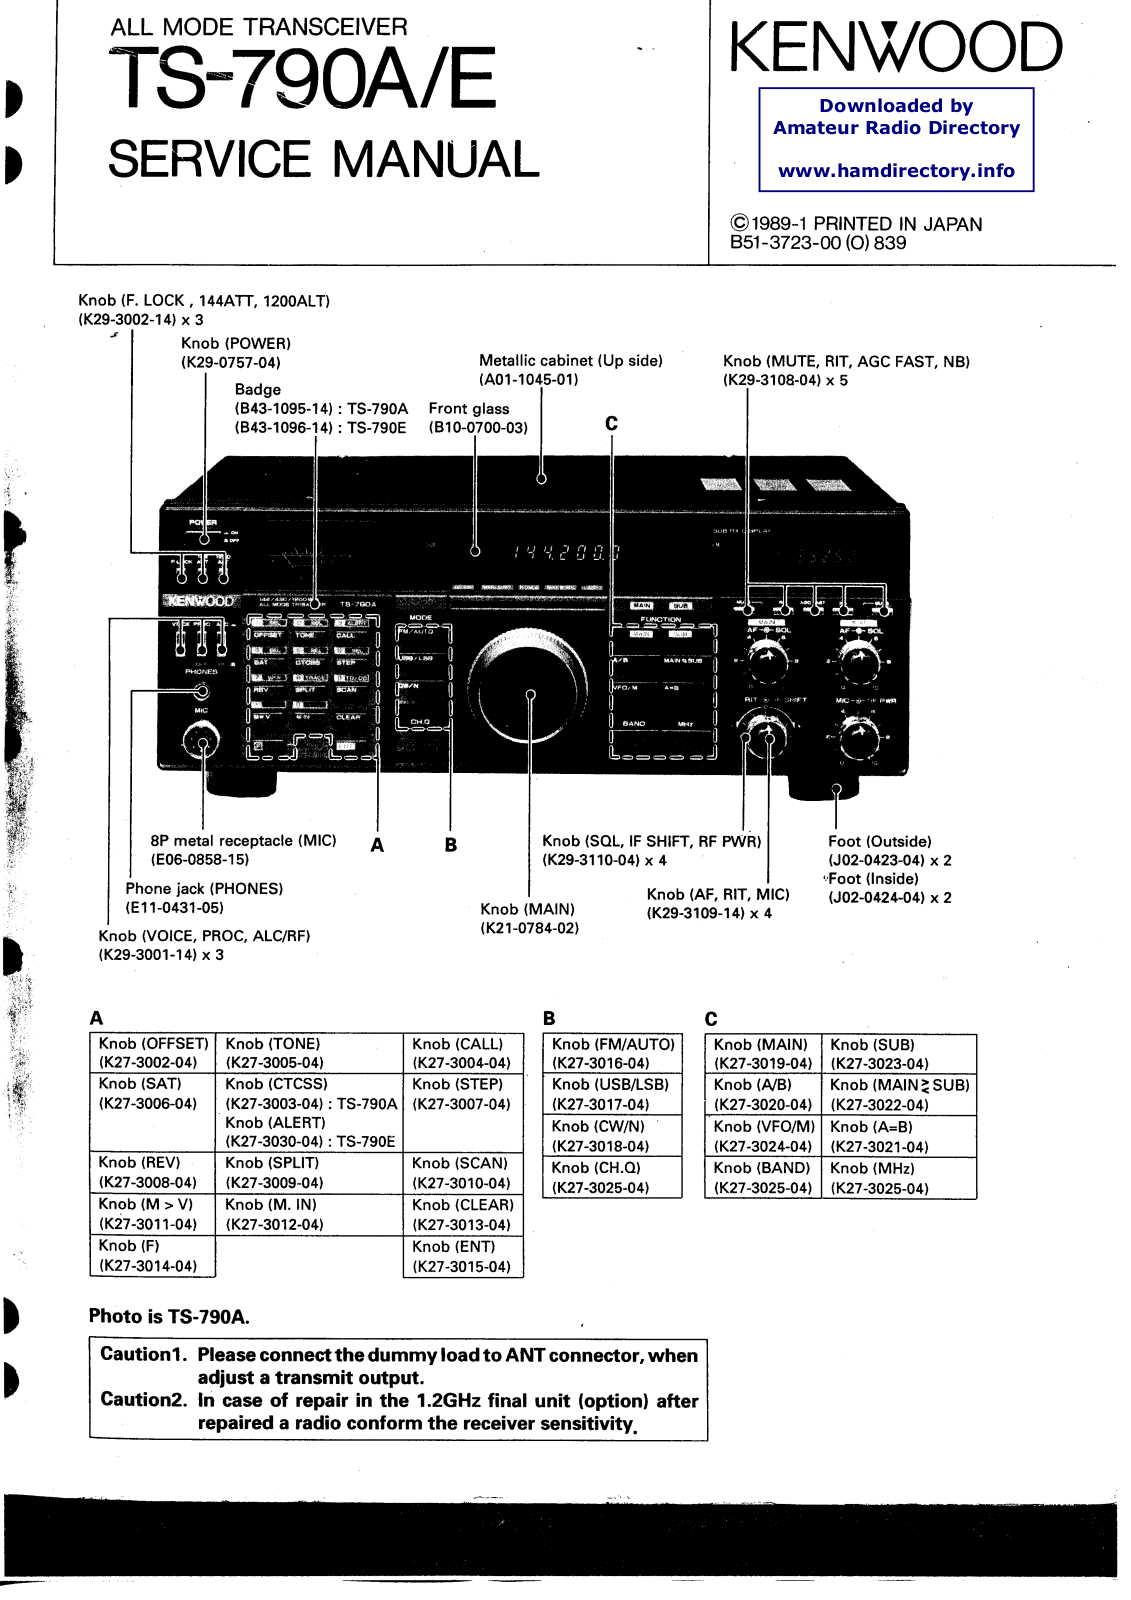 Kenwood ts 790 schematic